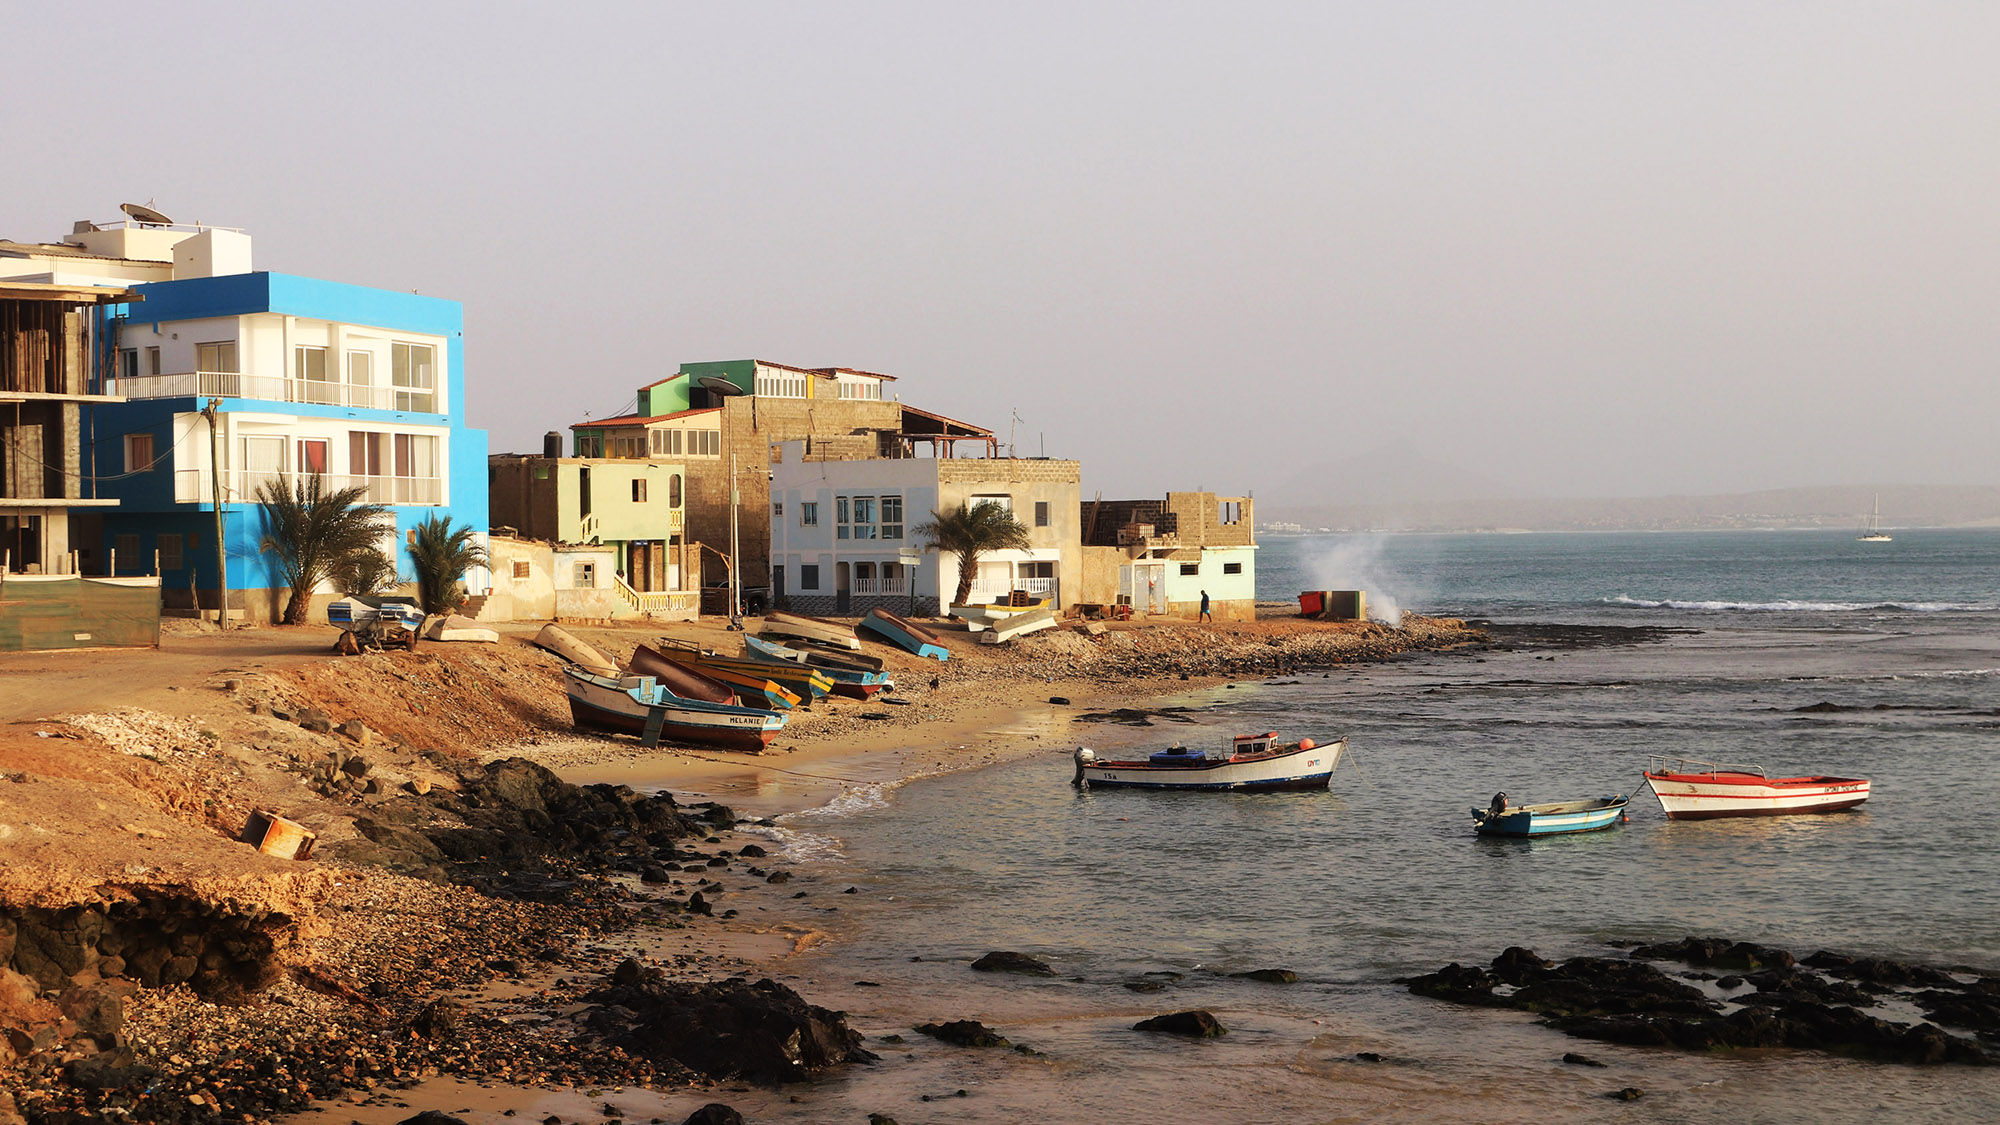 Boats along the shoreline of Boa Vista, one of the Cape Verde Islands.